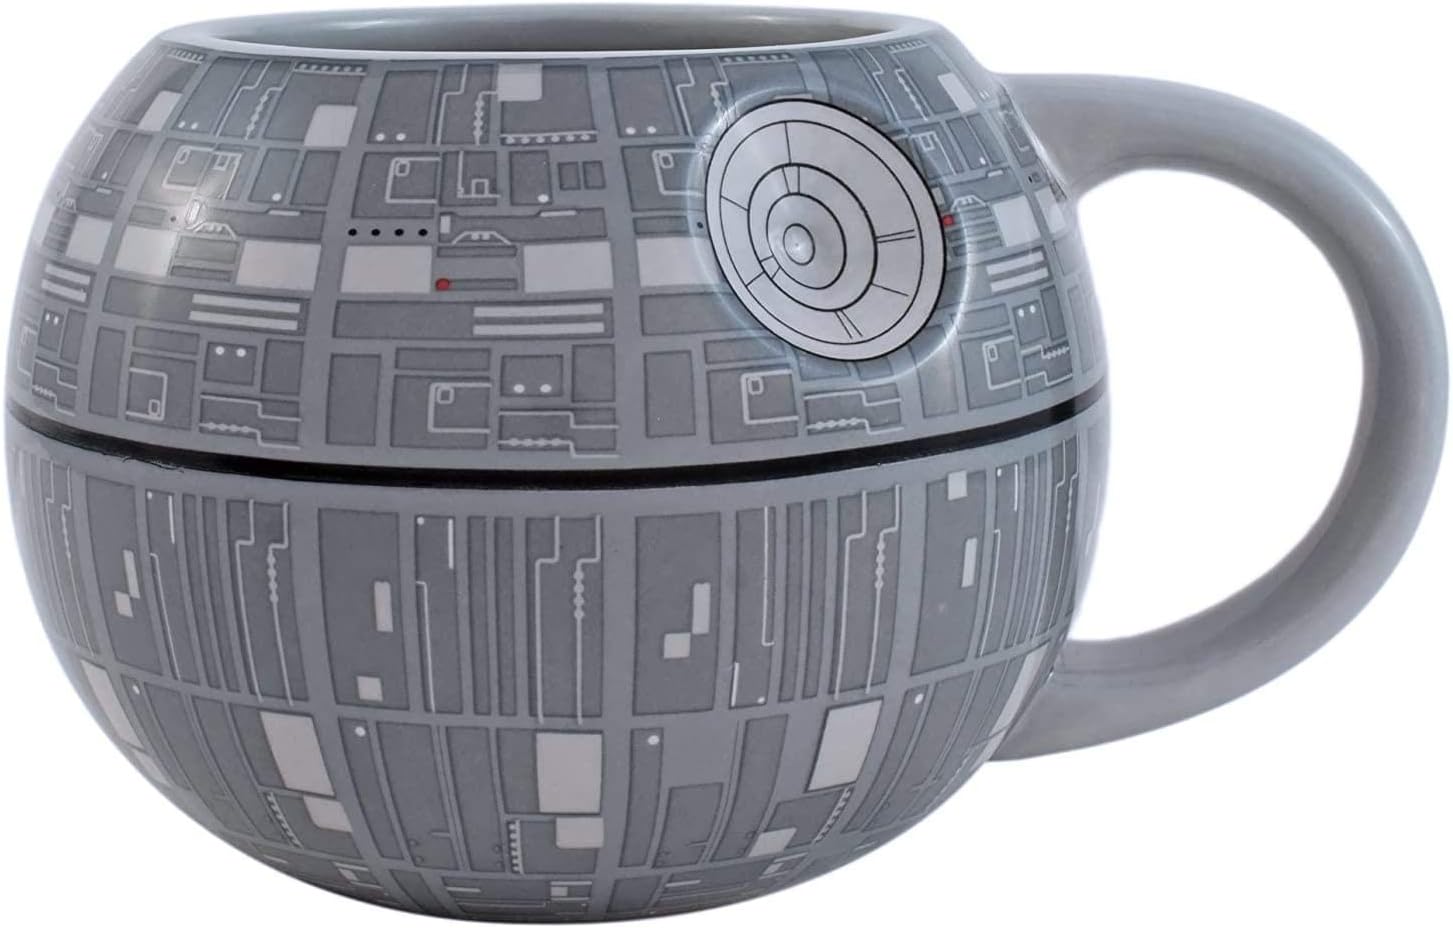 SILVER Disney Star Wars Death Star Mug - Sculpted Ceramic Mug